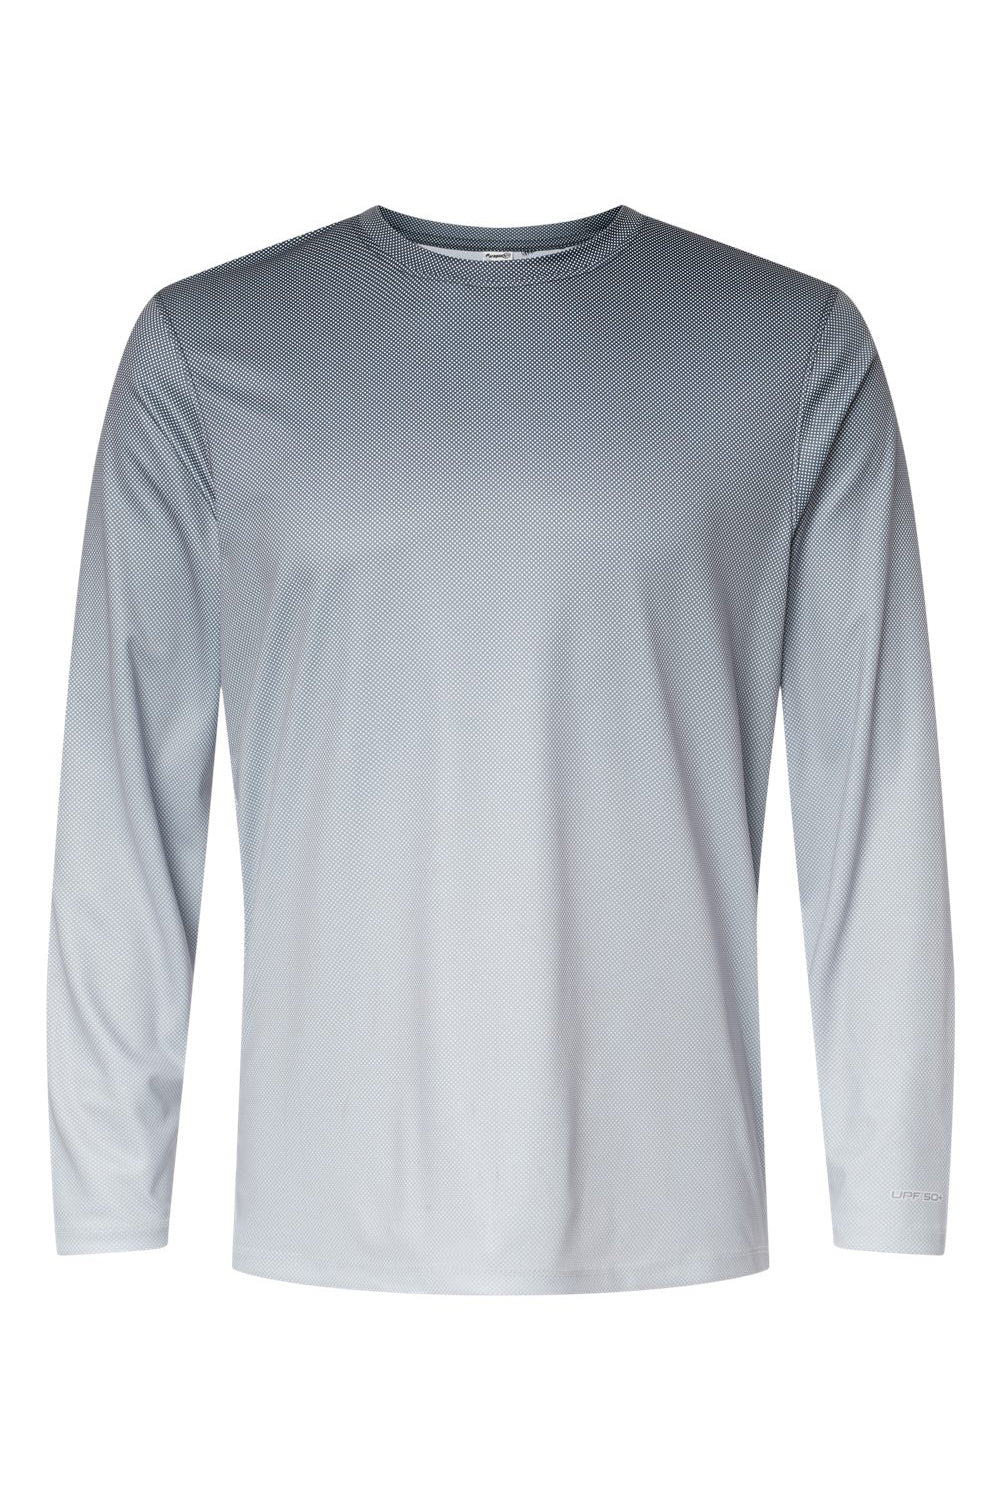 Paragon 225 Mens Barbados Performance Pin Dot Long Sleeve Crewneck T-Shirt Black/Light Charcoal Grey Flat Front